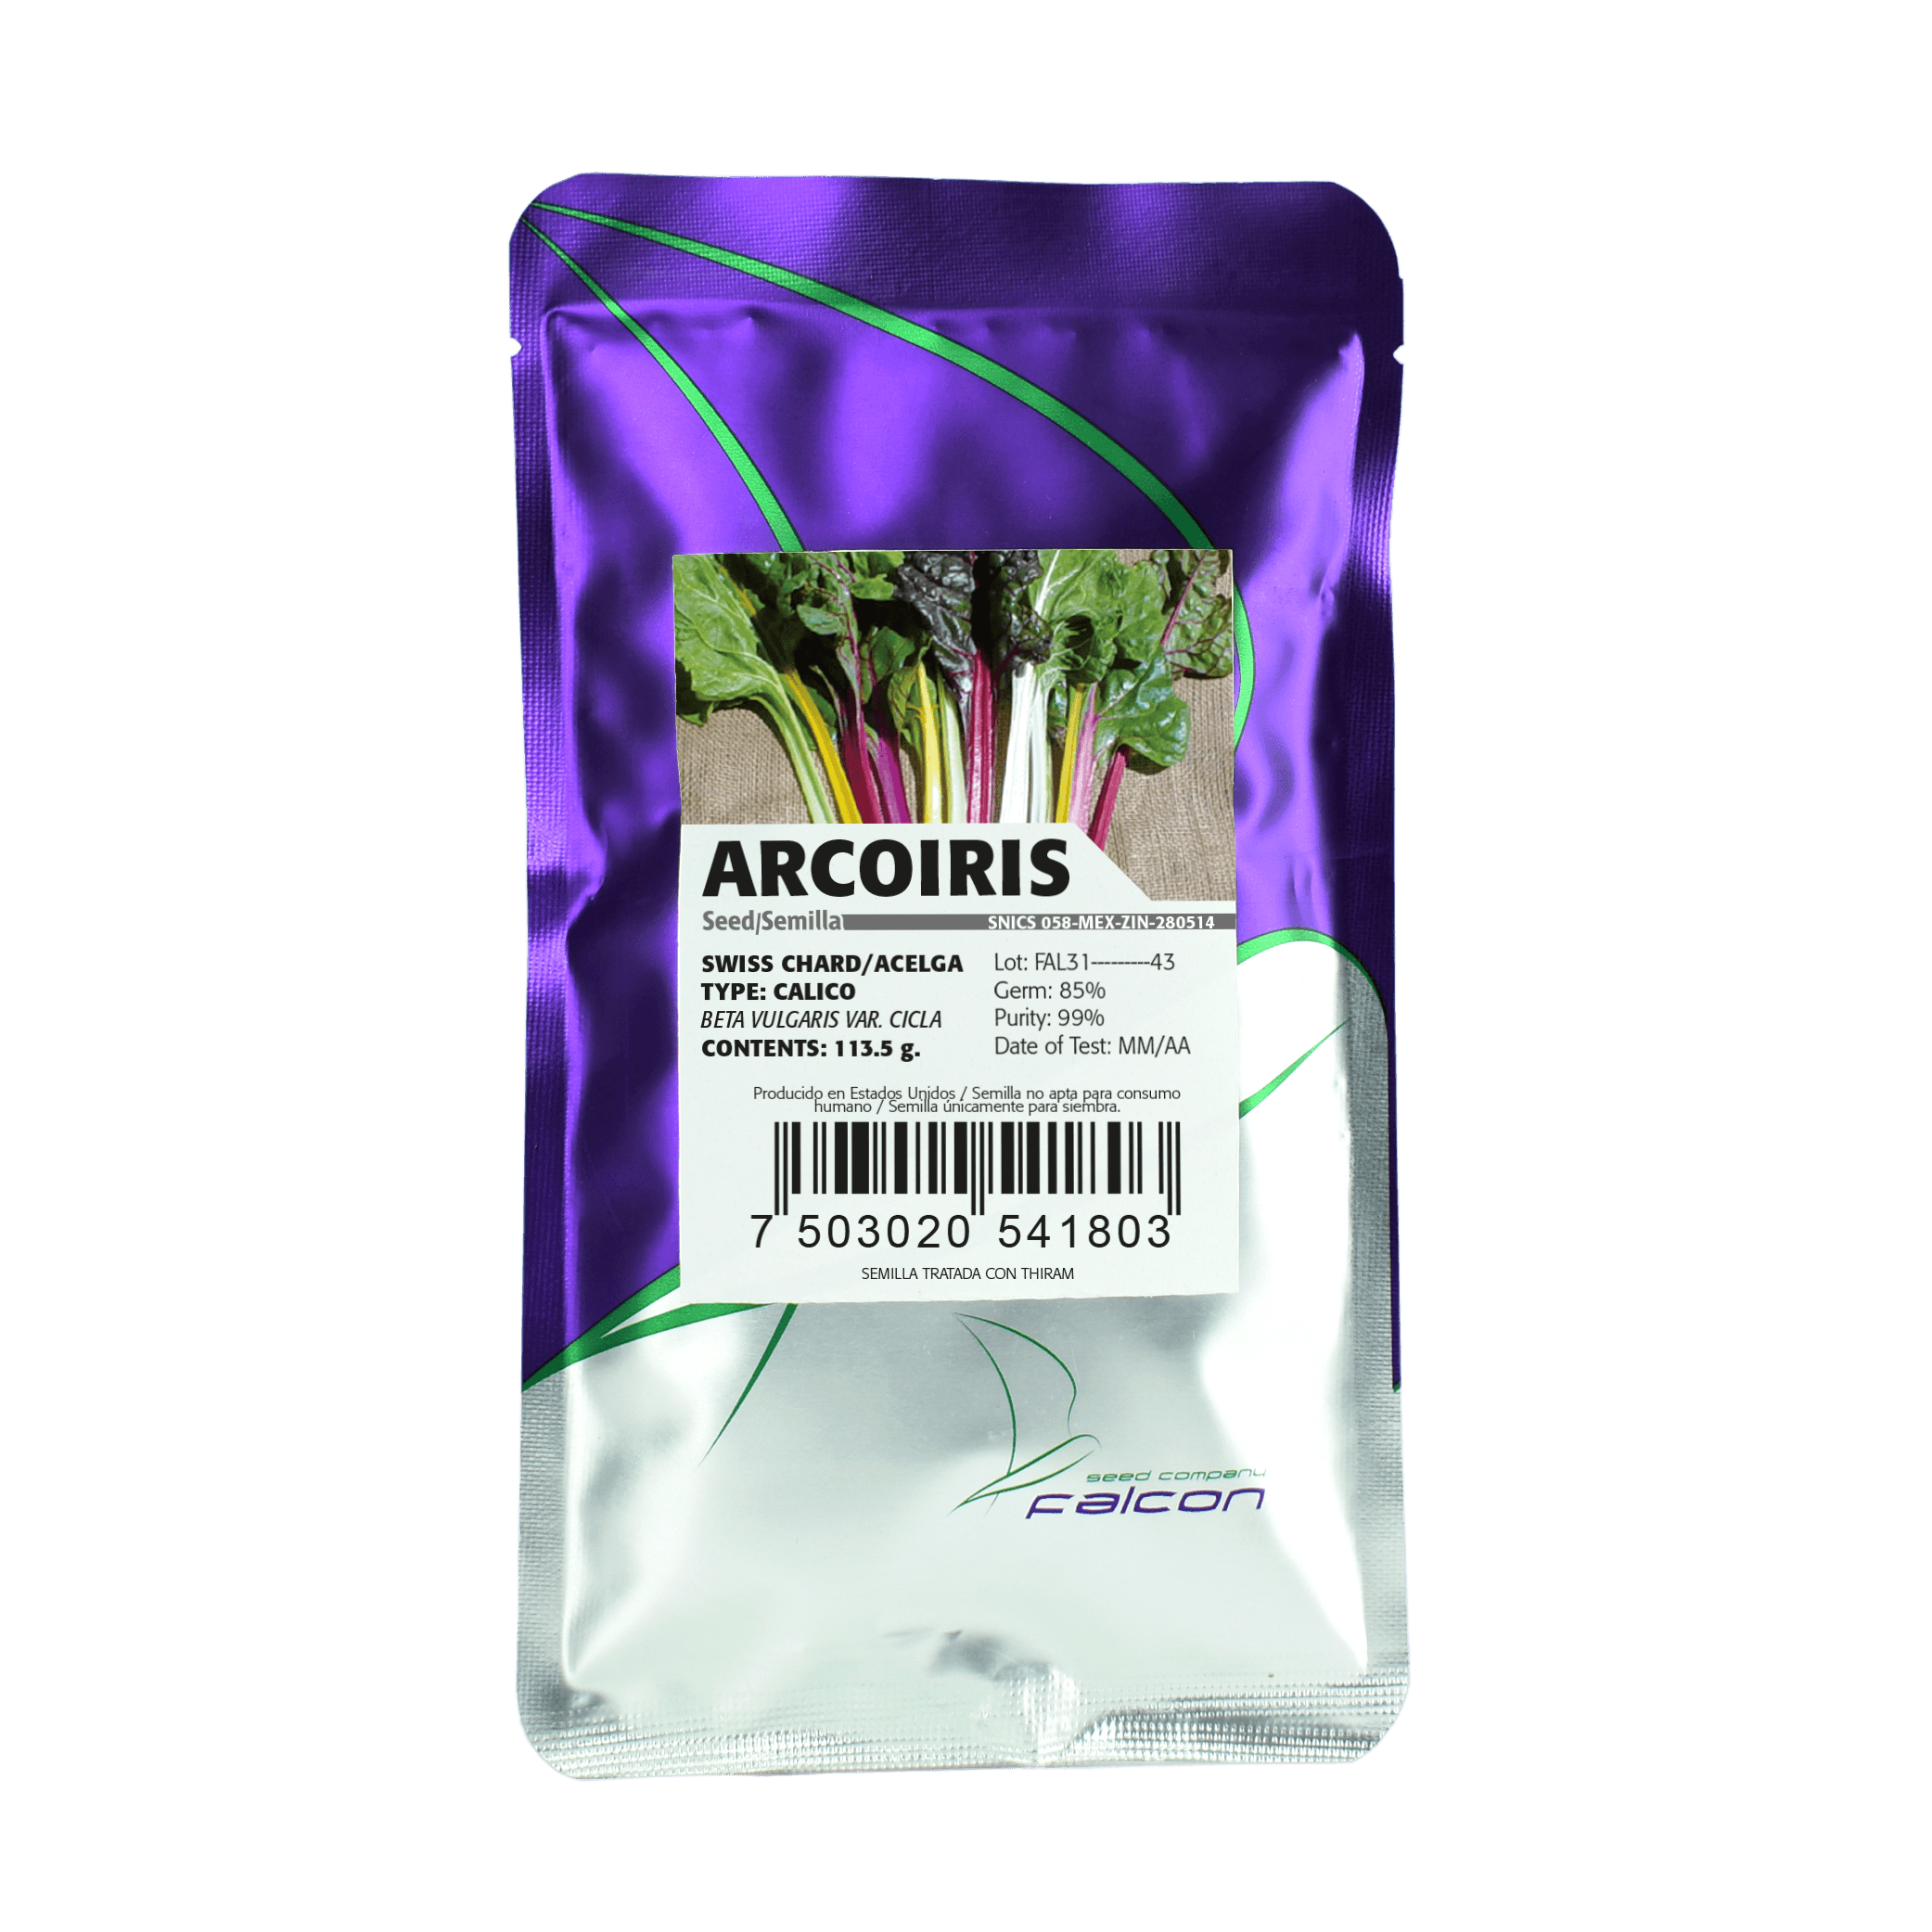 Acelga PL Arcoiris Falcon Seeds